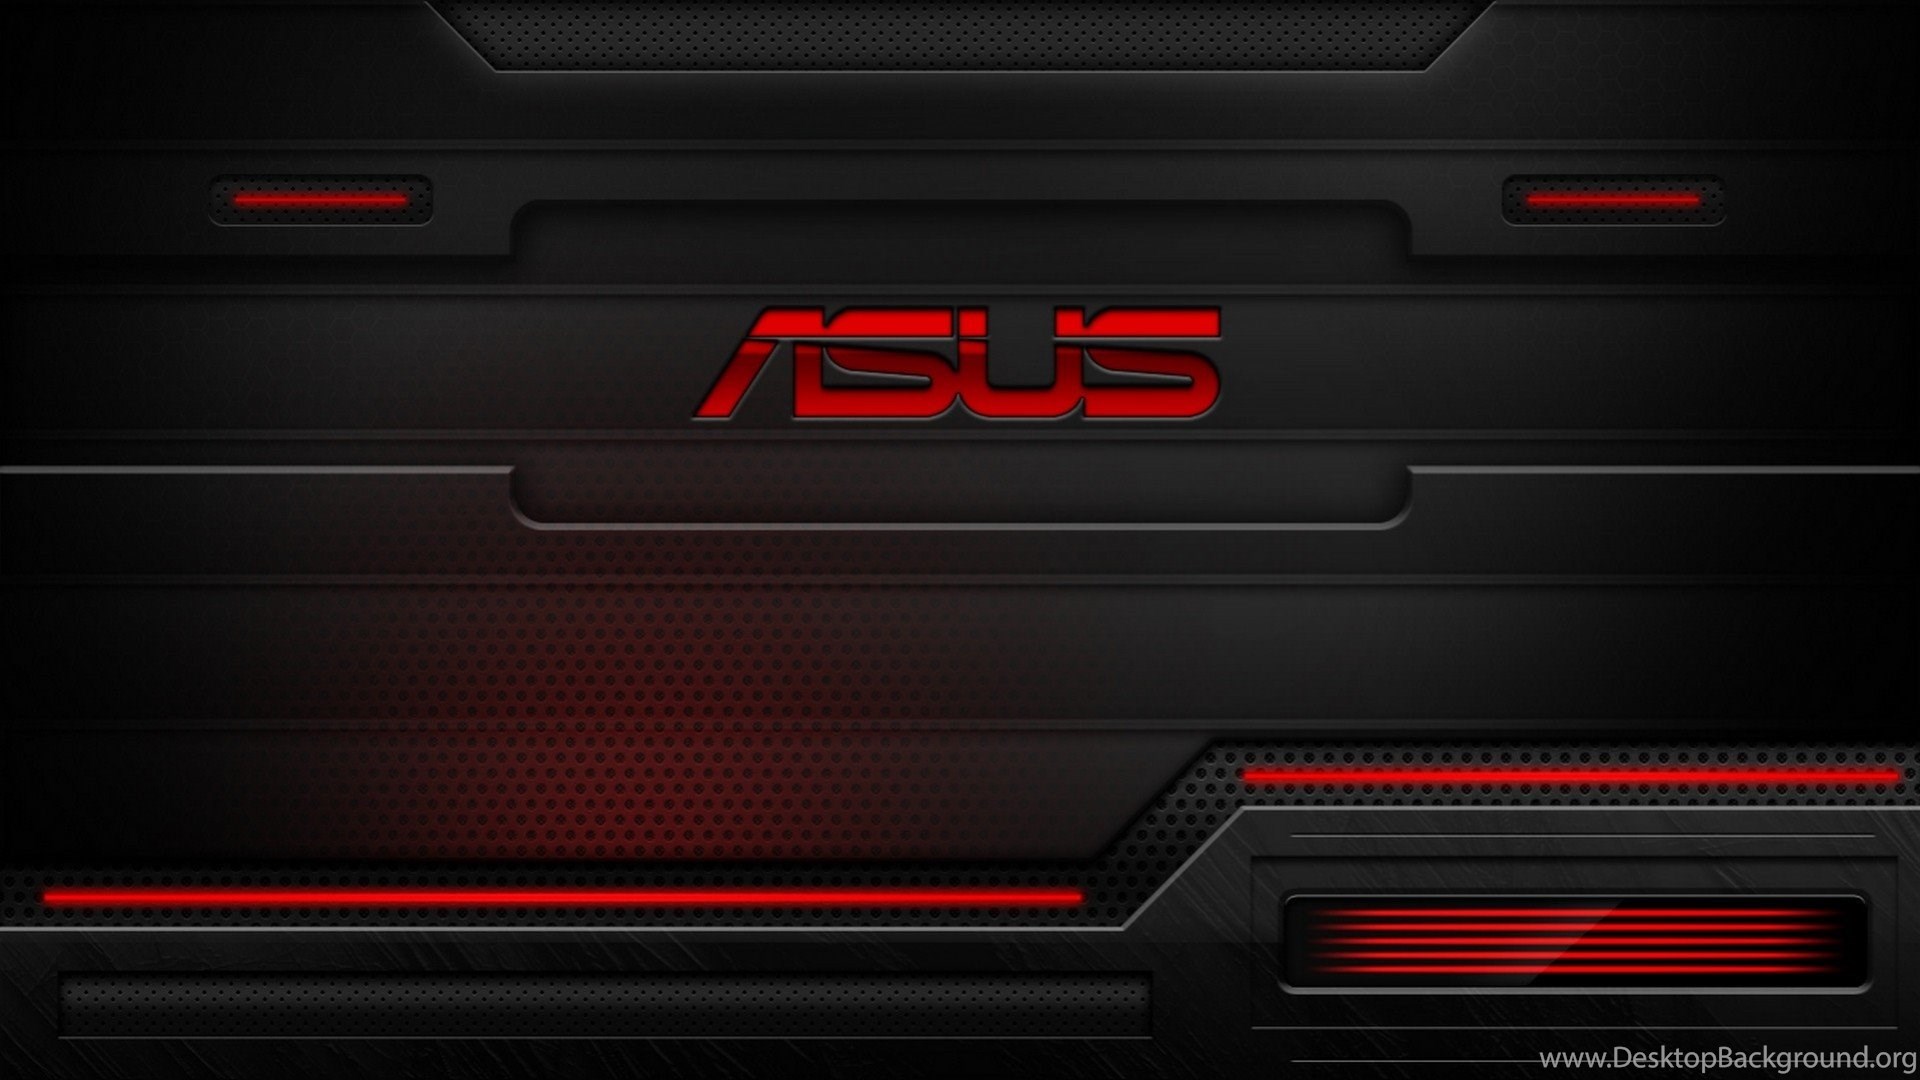 HD Red And Black Asus Technology Wallpaper For Desktop Full Size. Desktop Background